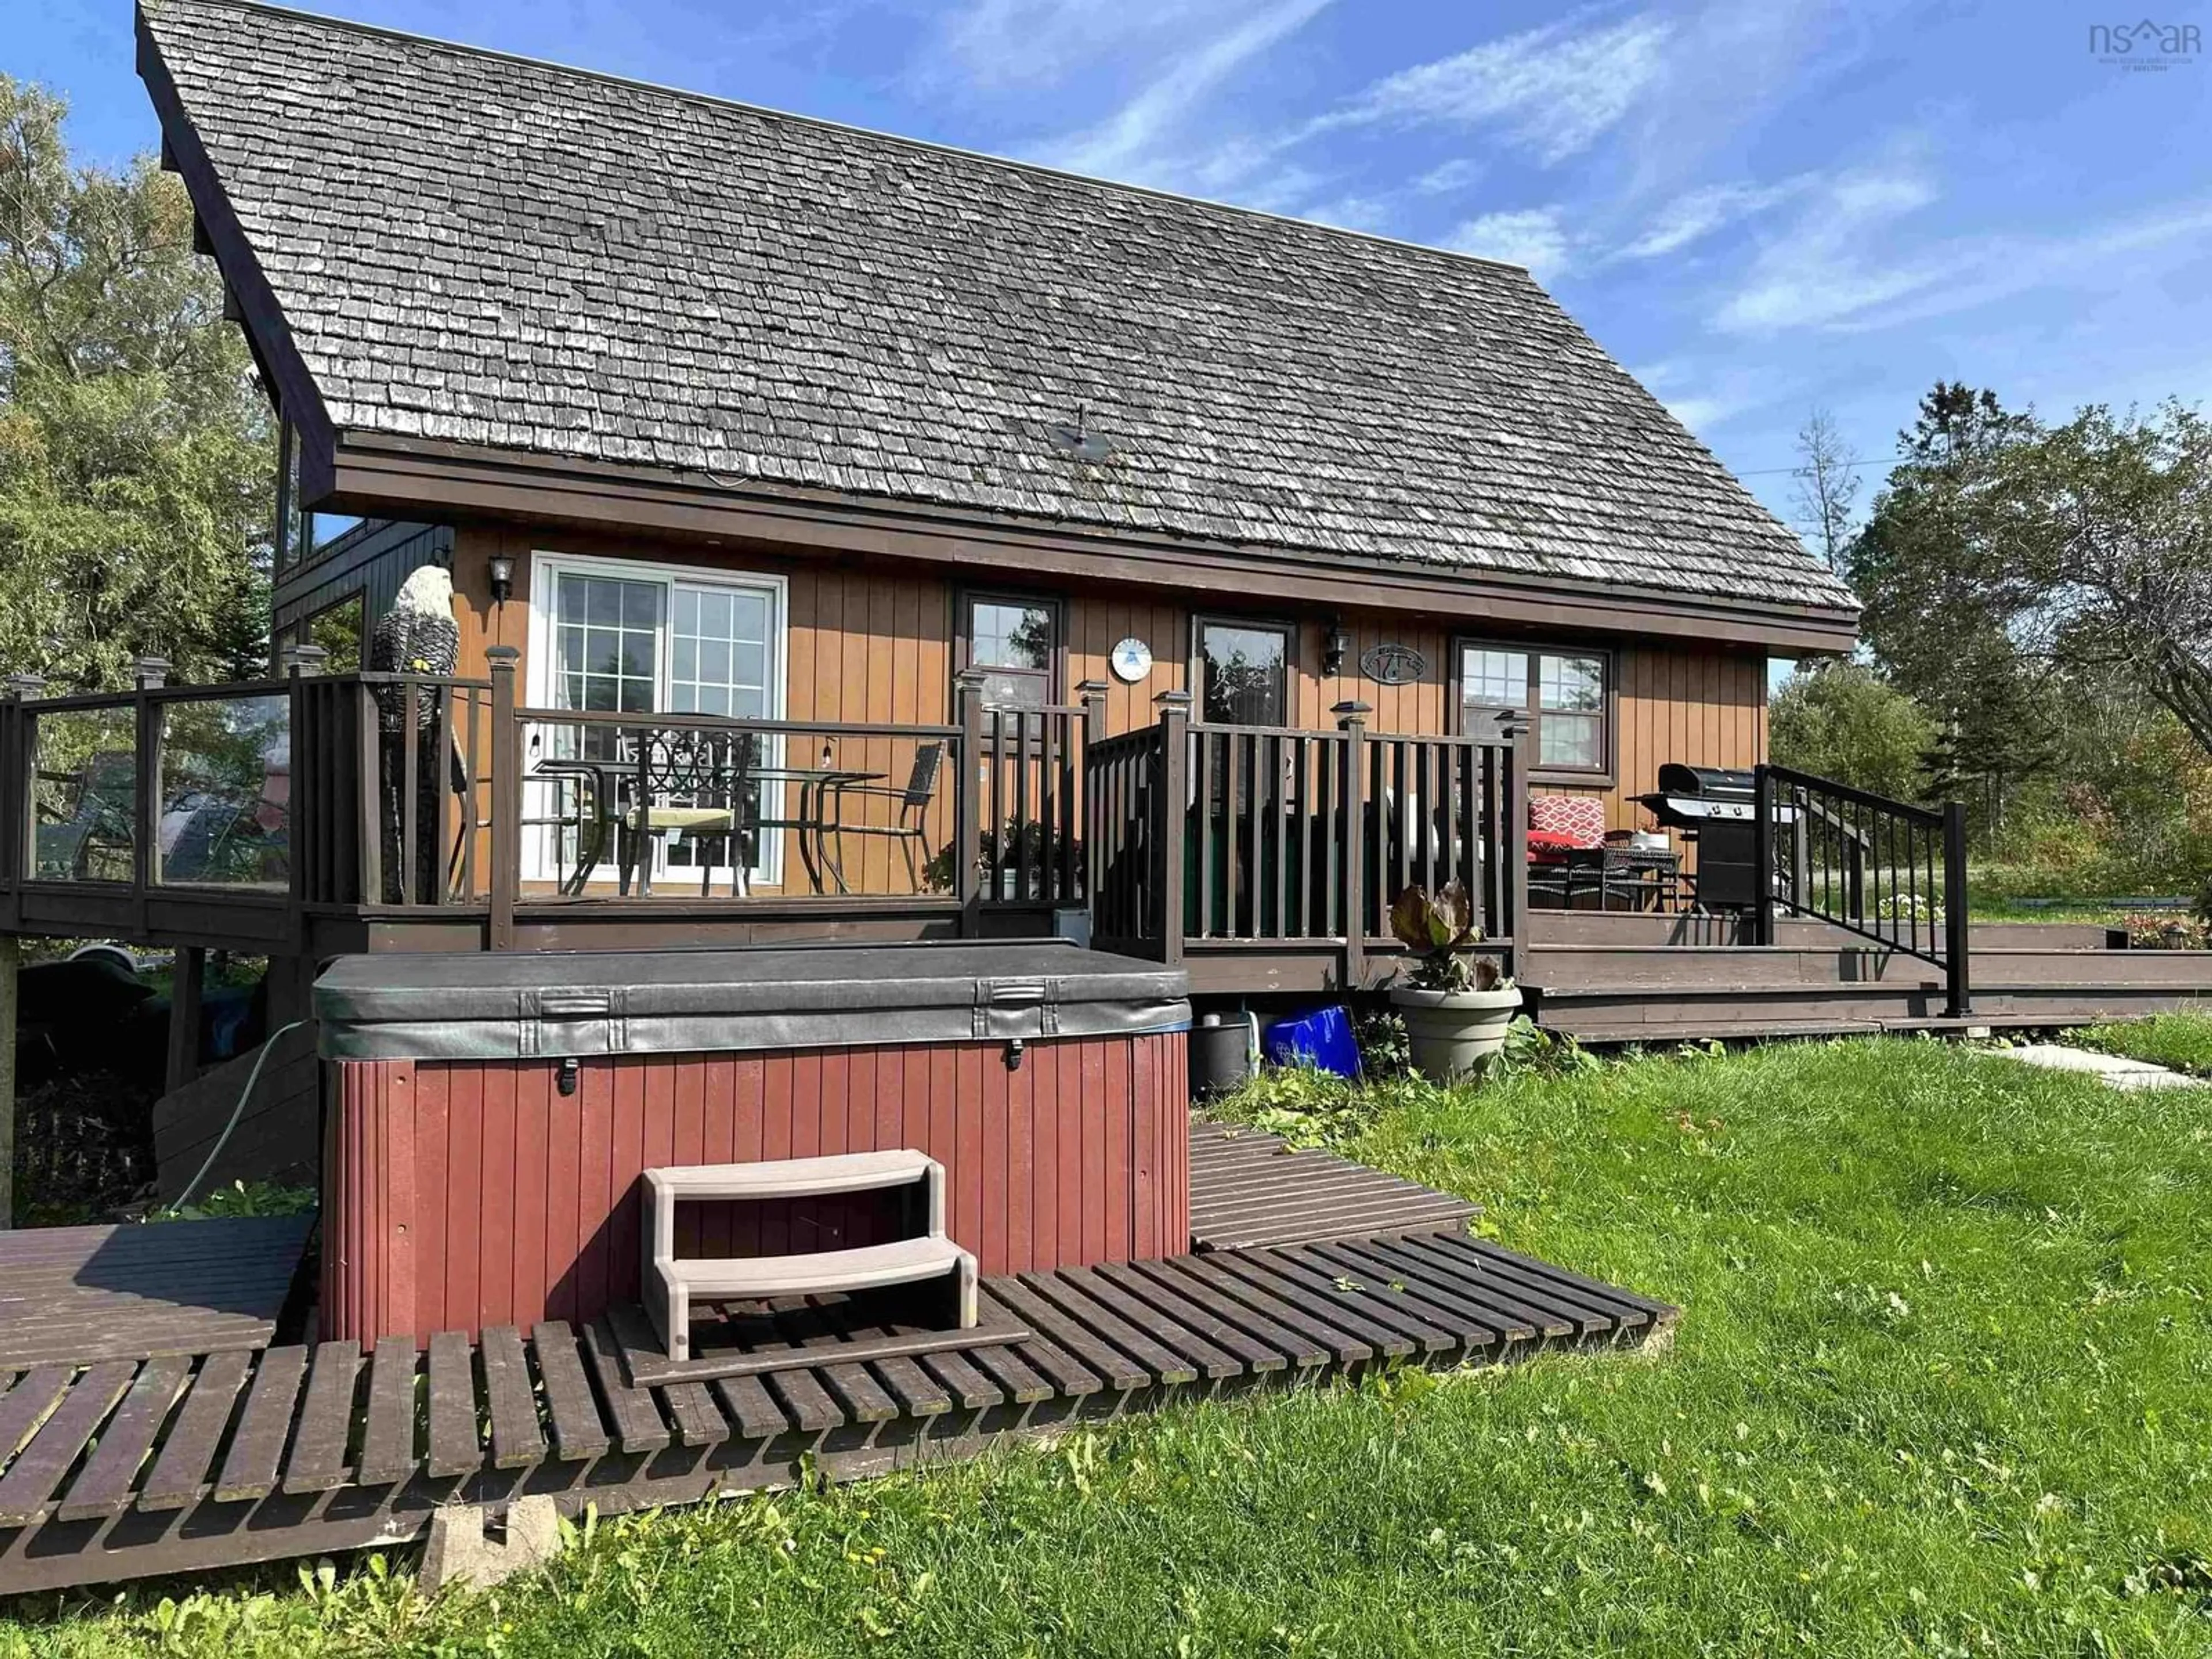 Cottage for 2361 West Bay Rd, Dundee Nova Scotia B0E 3K0